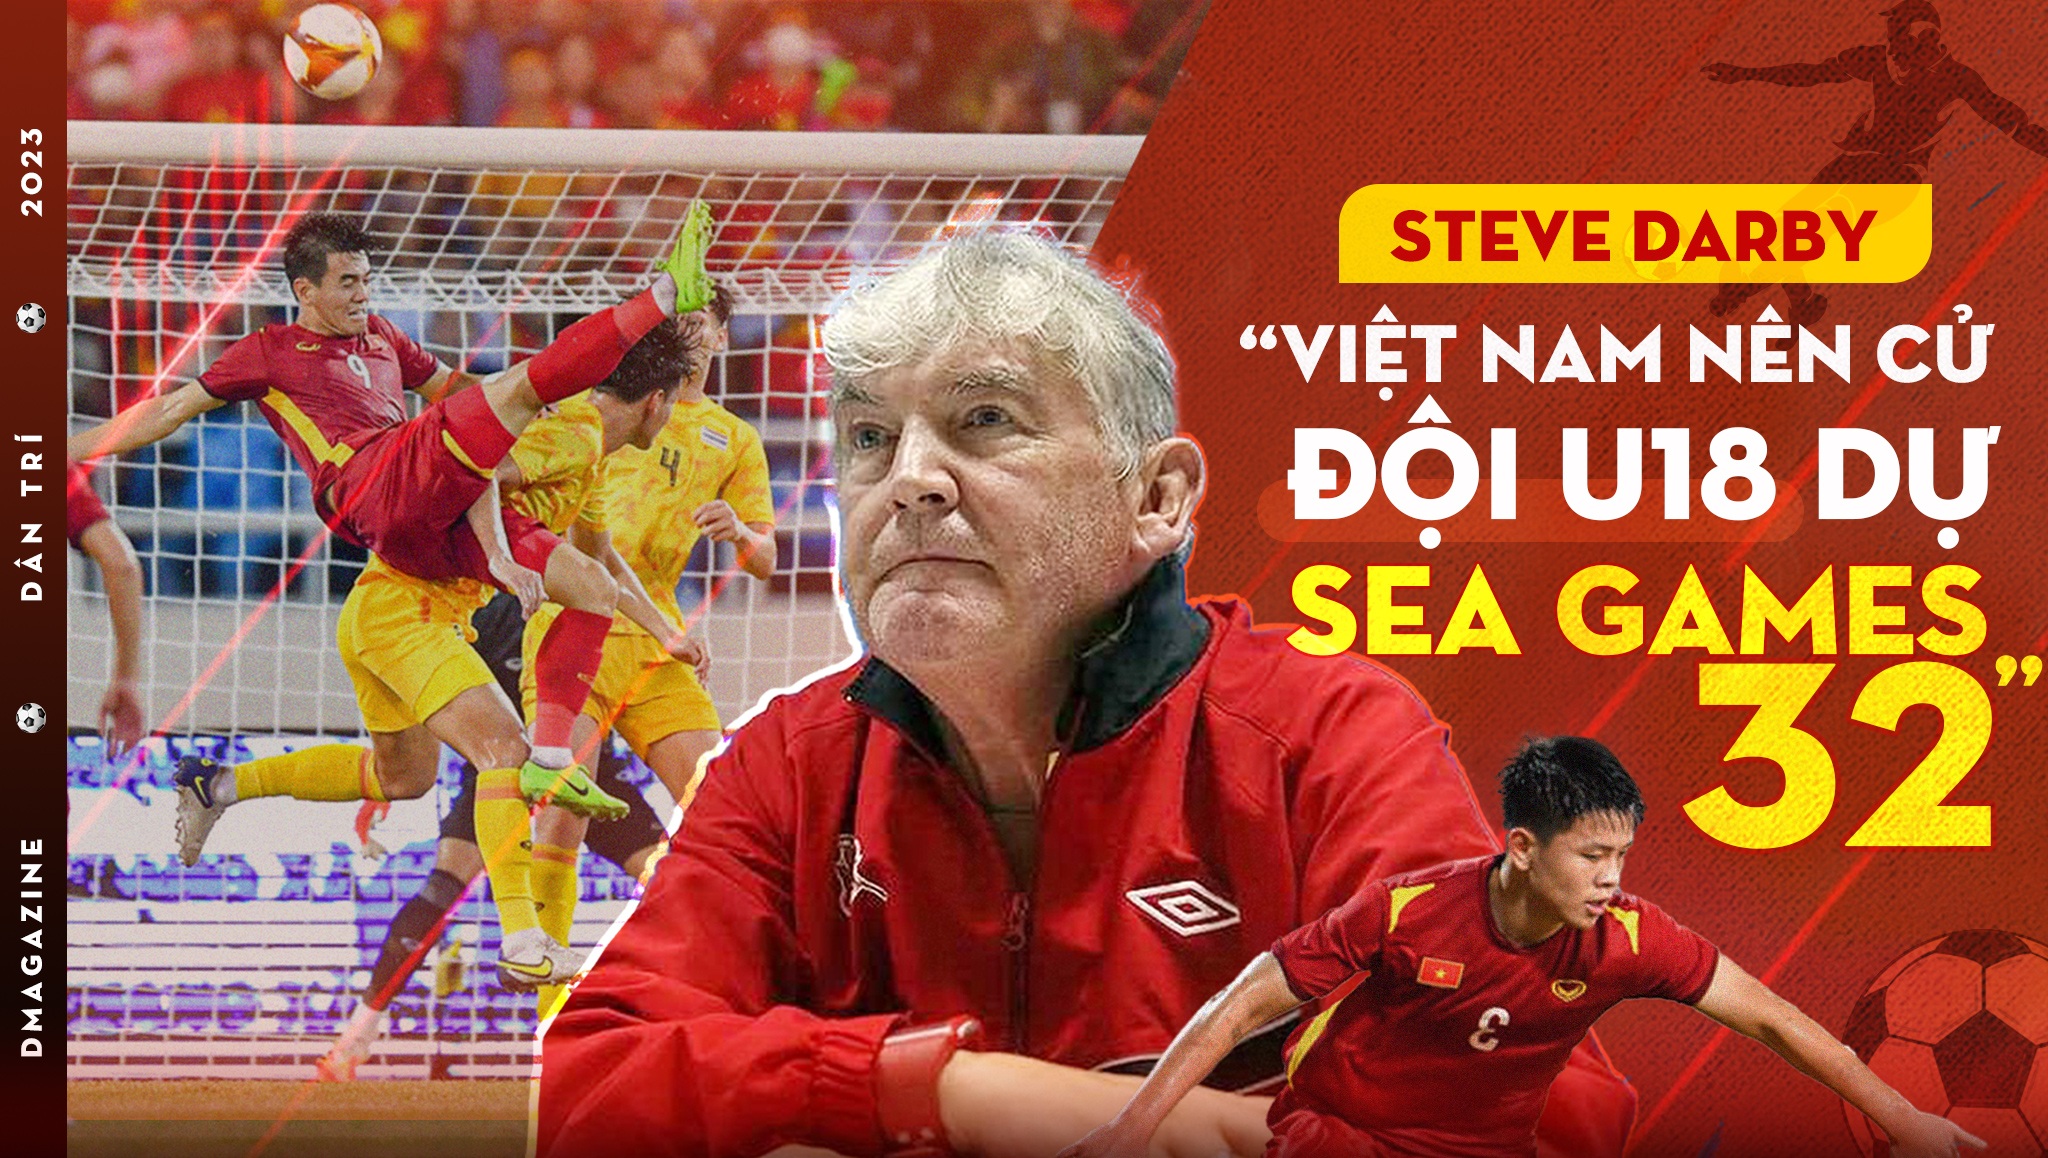 Steve Darby: "Việt Nam nên cử đội U18 dự SEA Games 32"